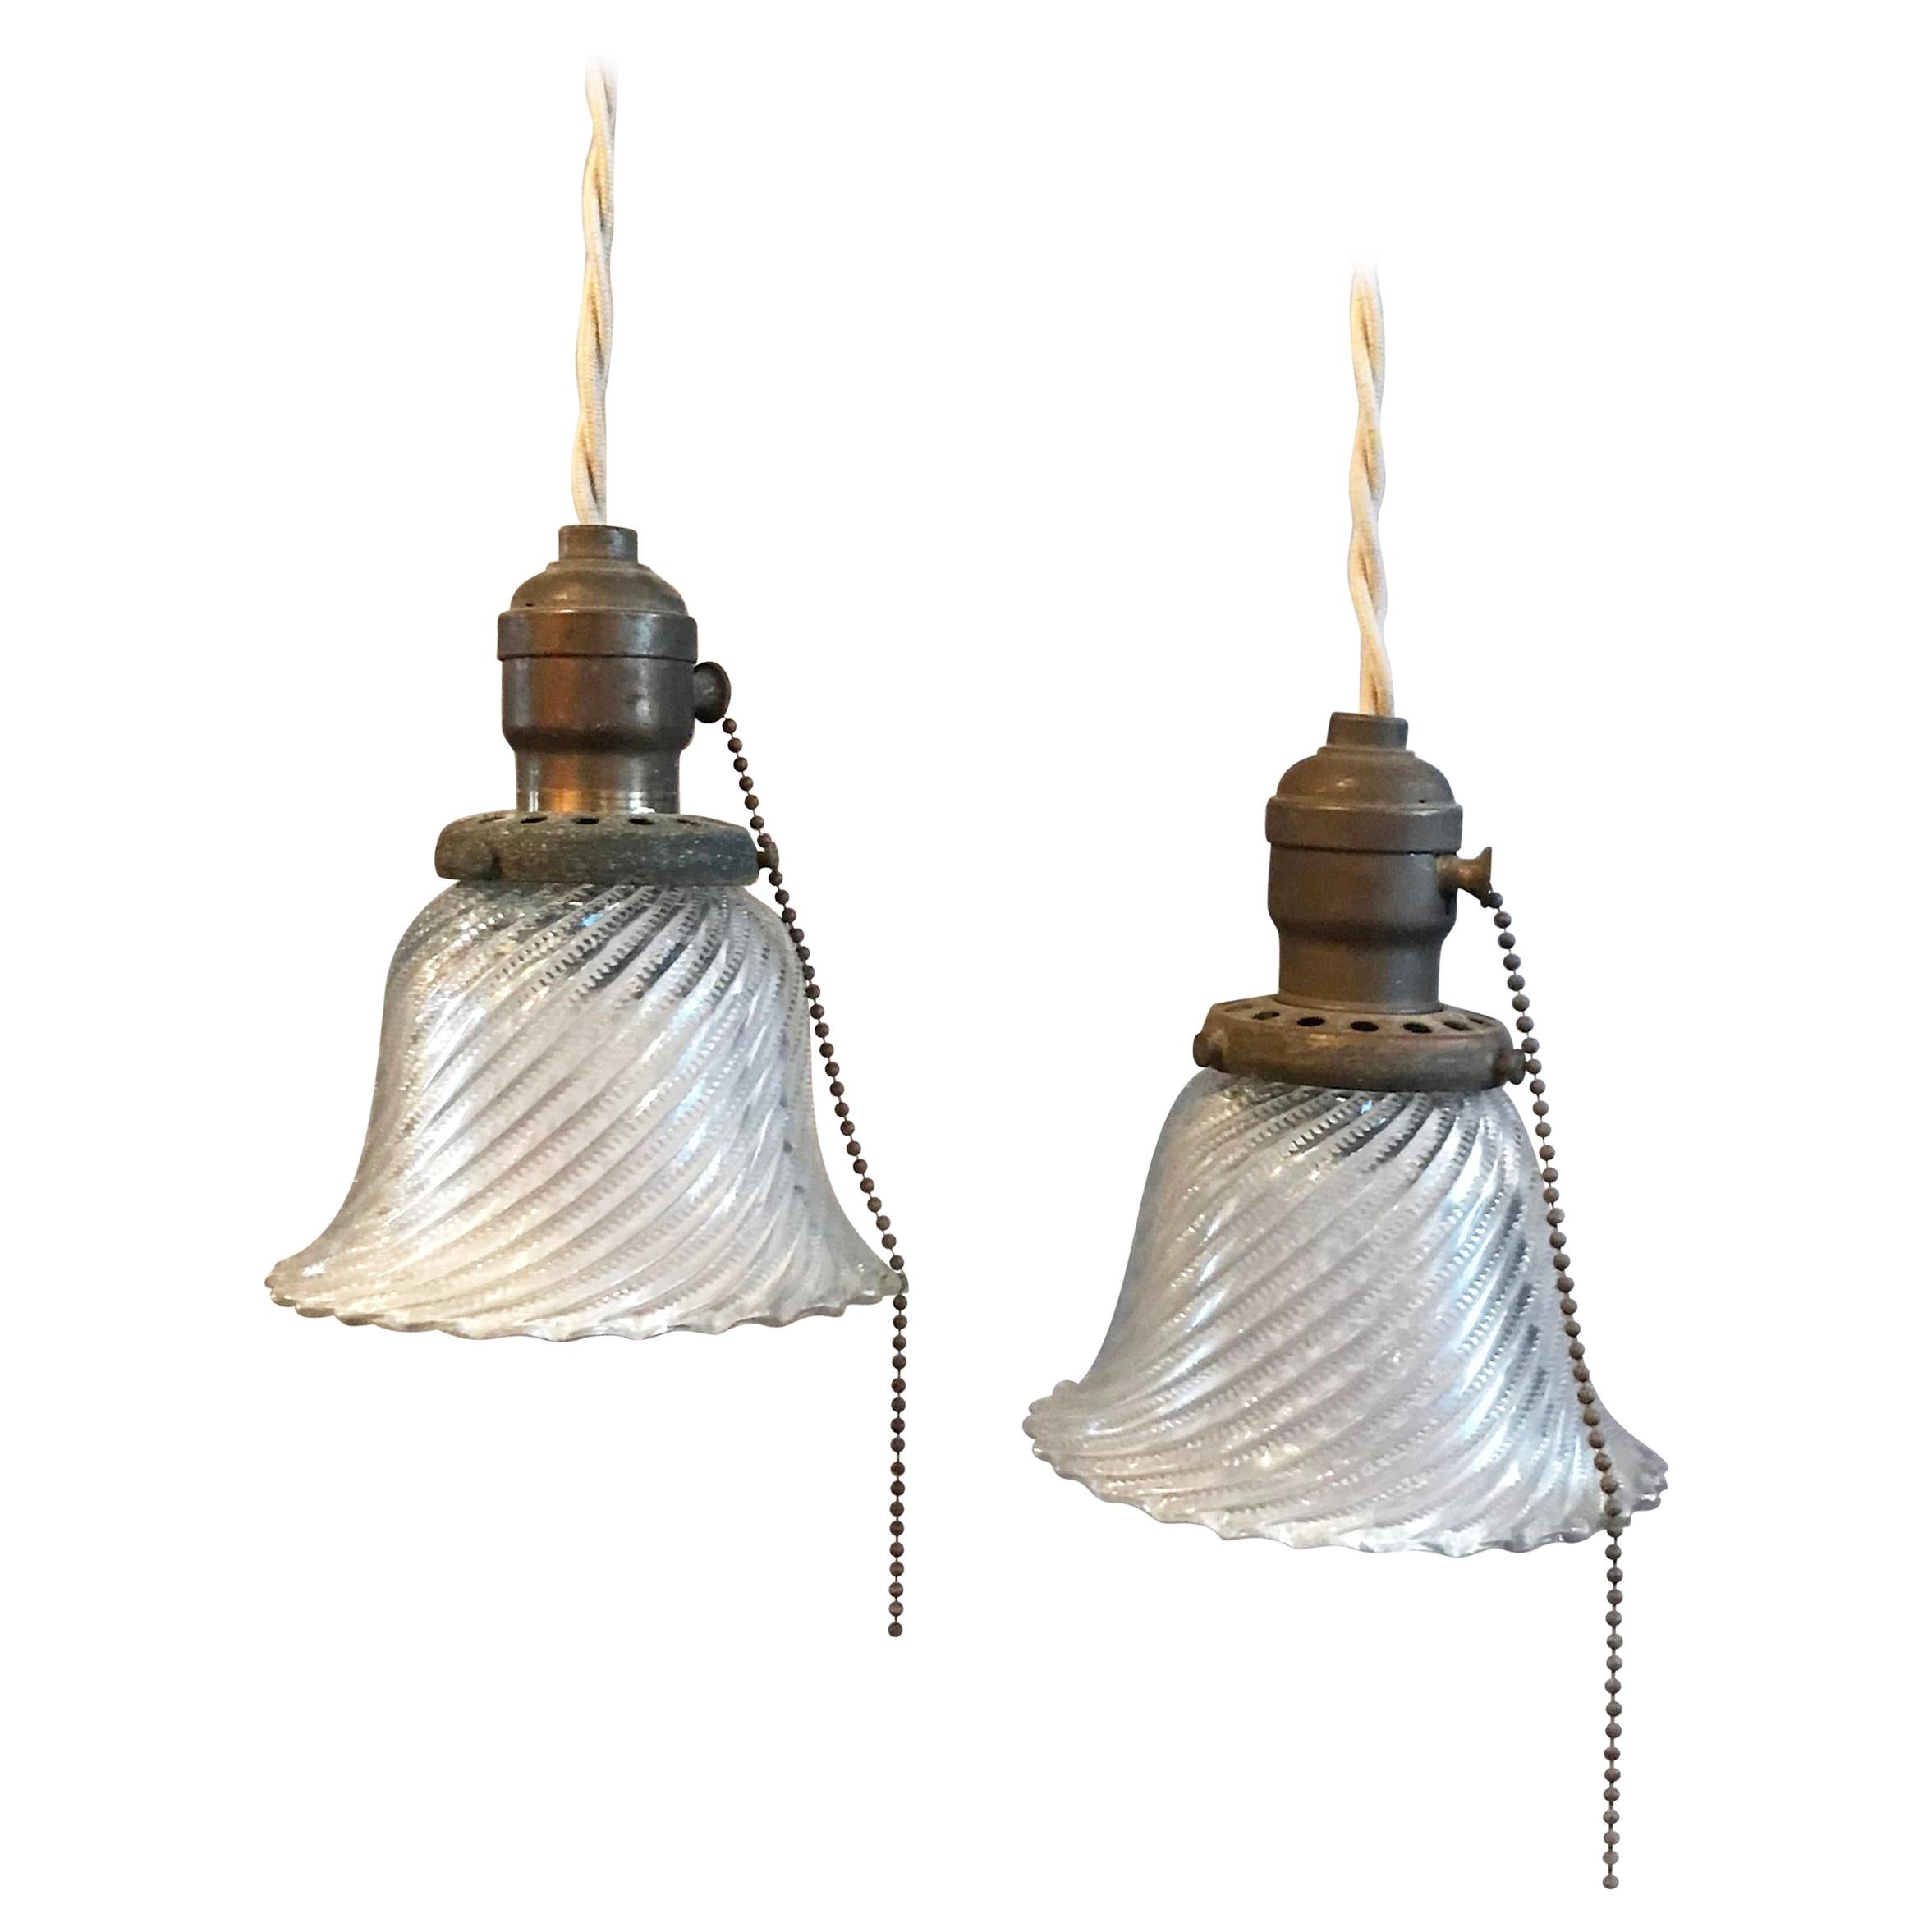 Industrial Petite Diagonal Swirl Holophane Bell Pendant Lights